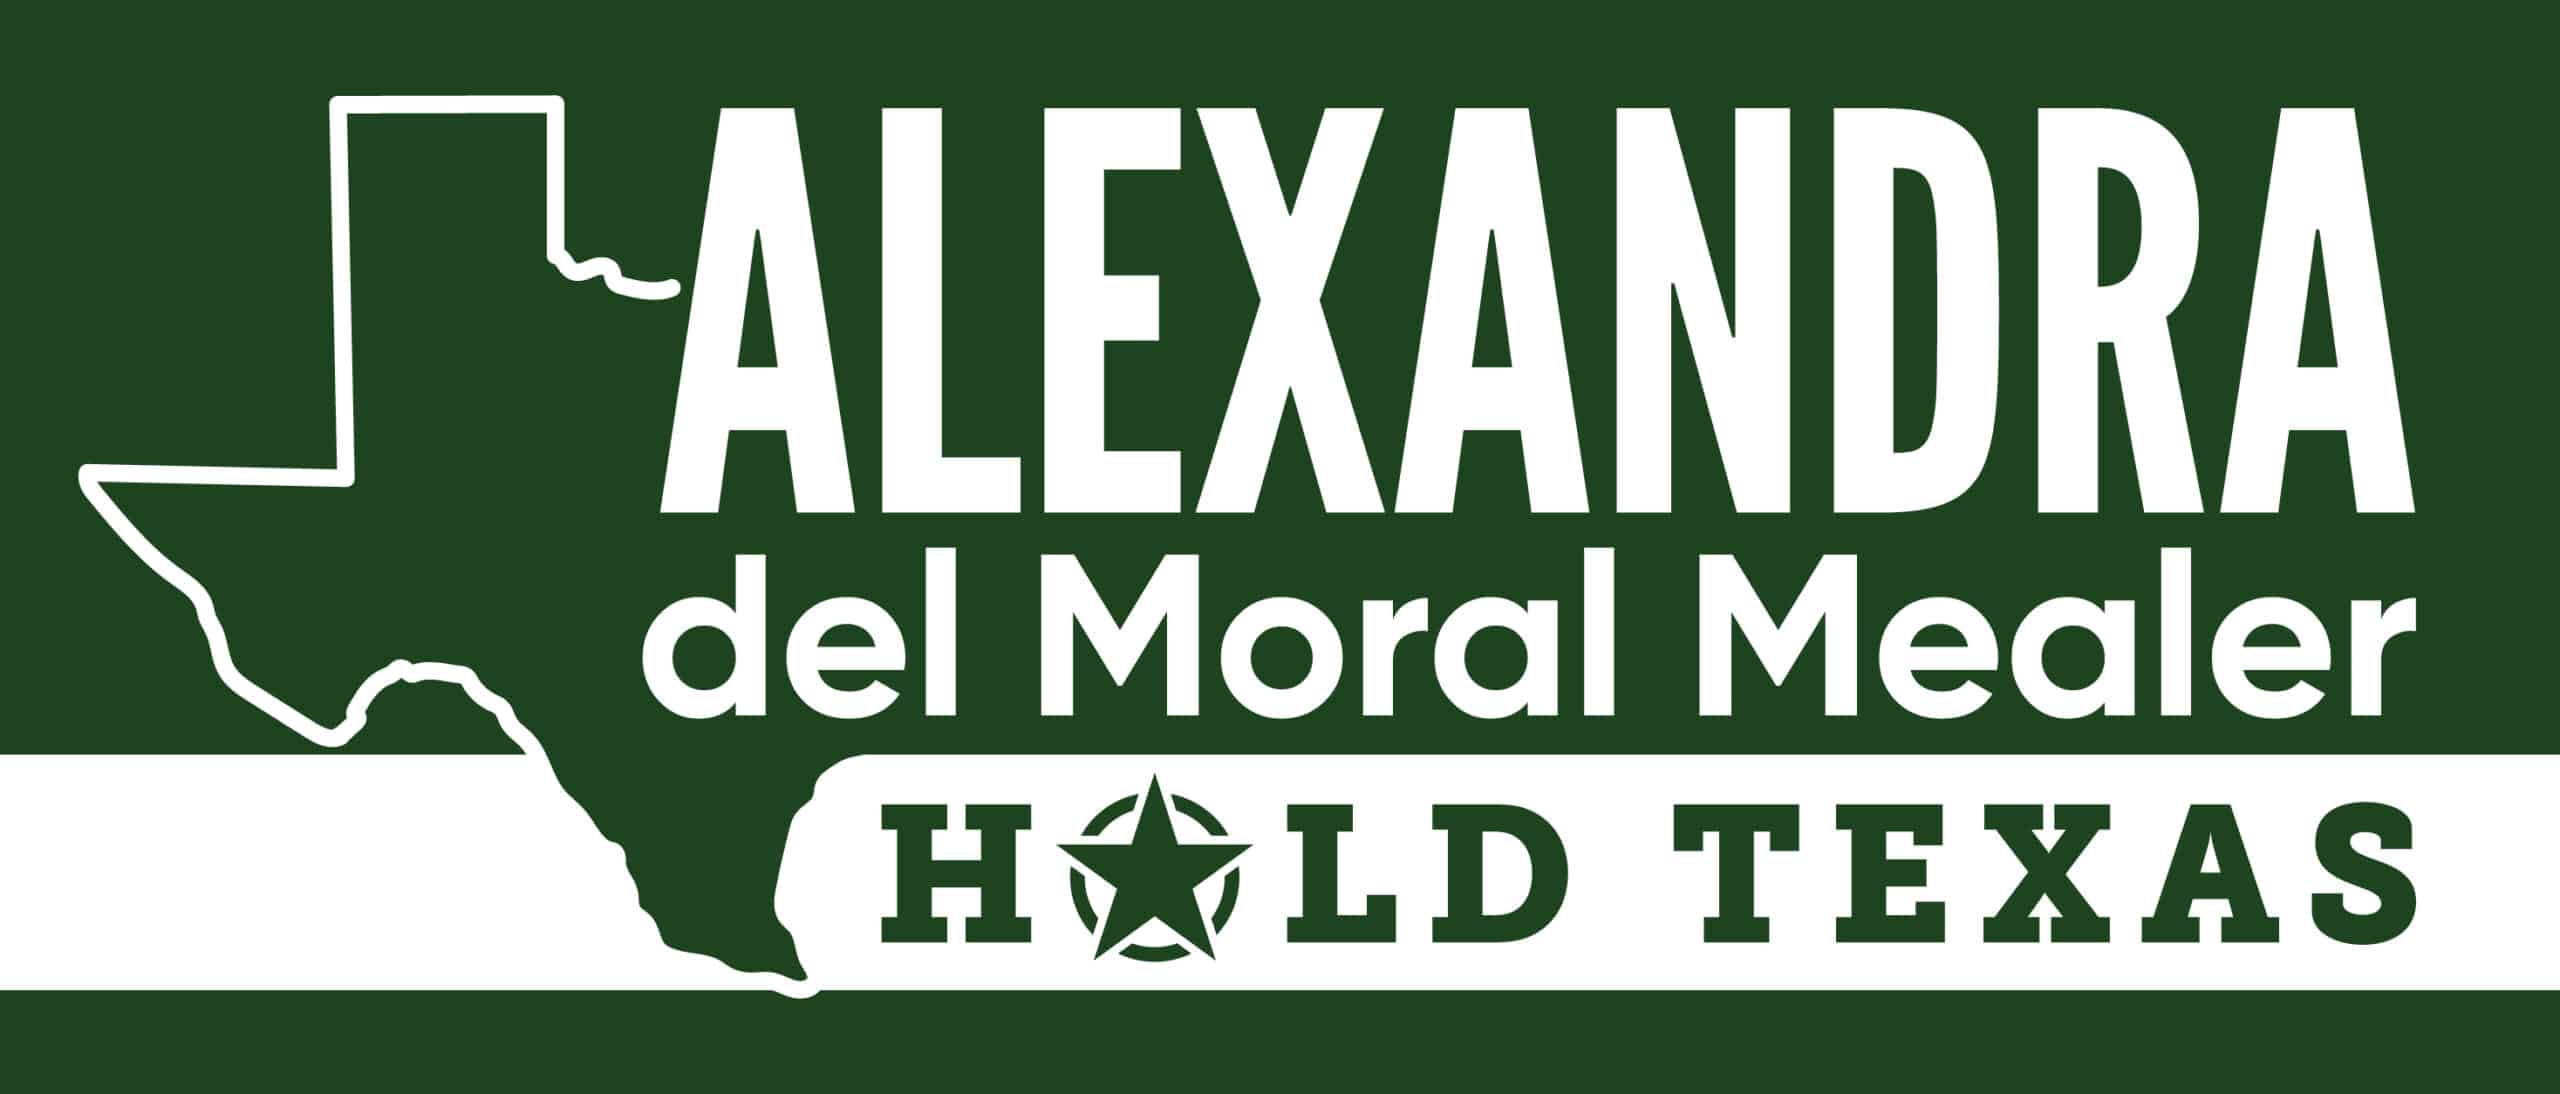 Alexandra del Moral Mealer For Harris County Judge